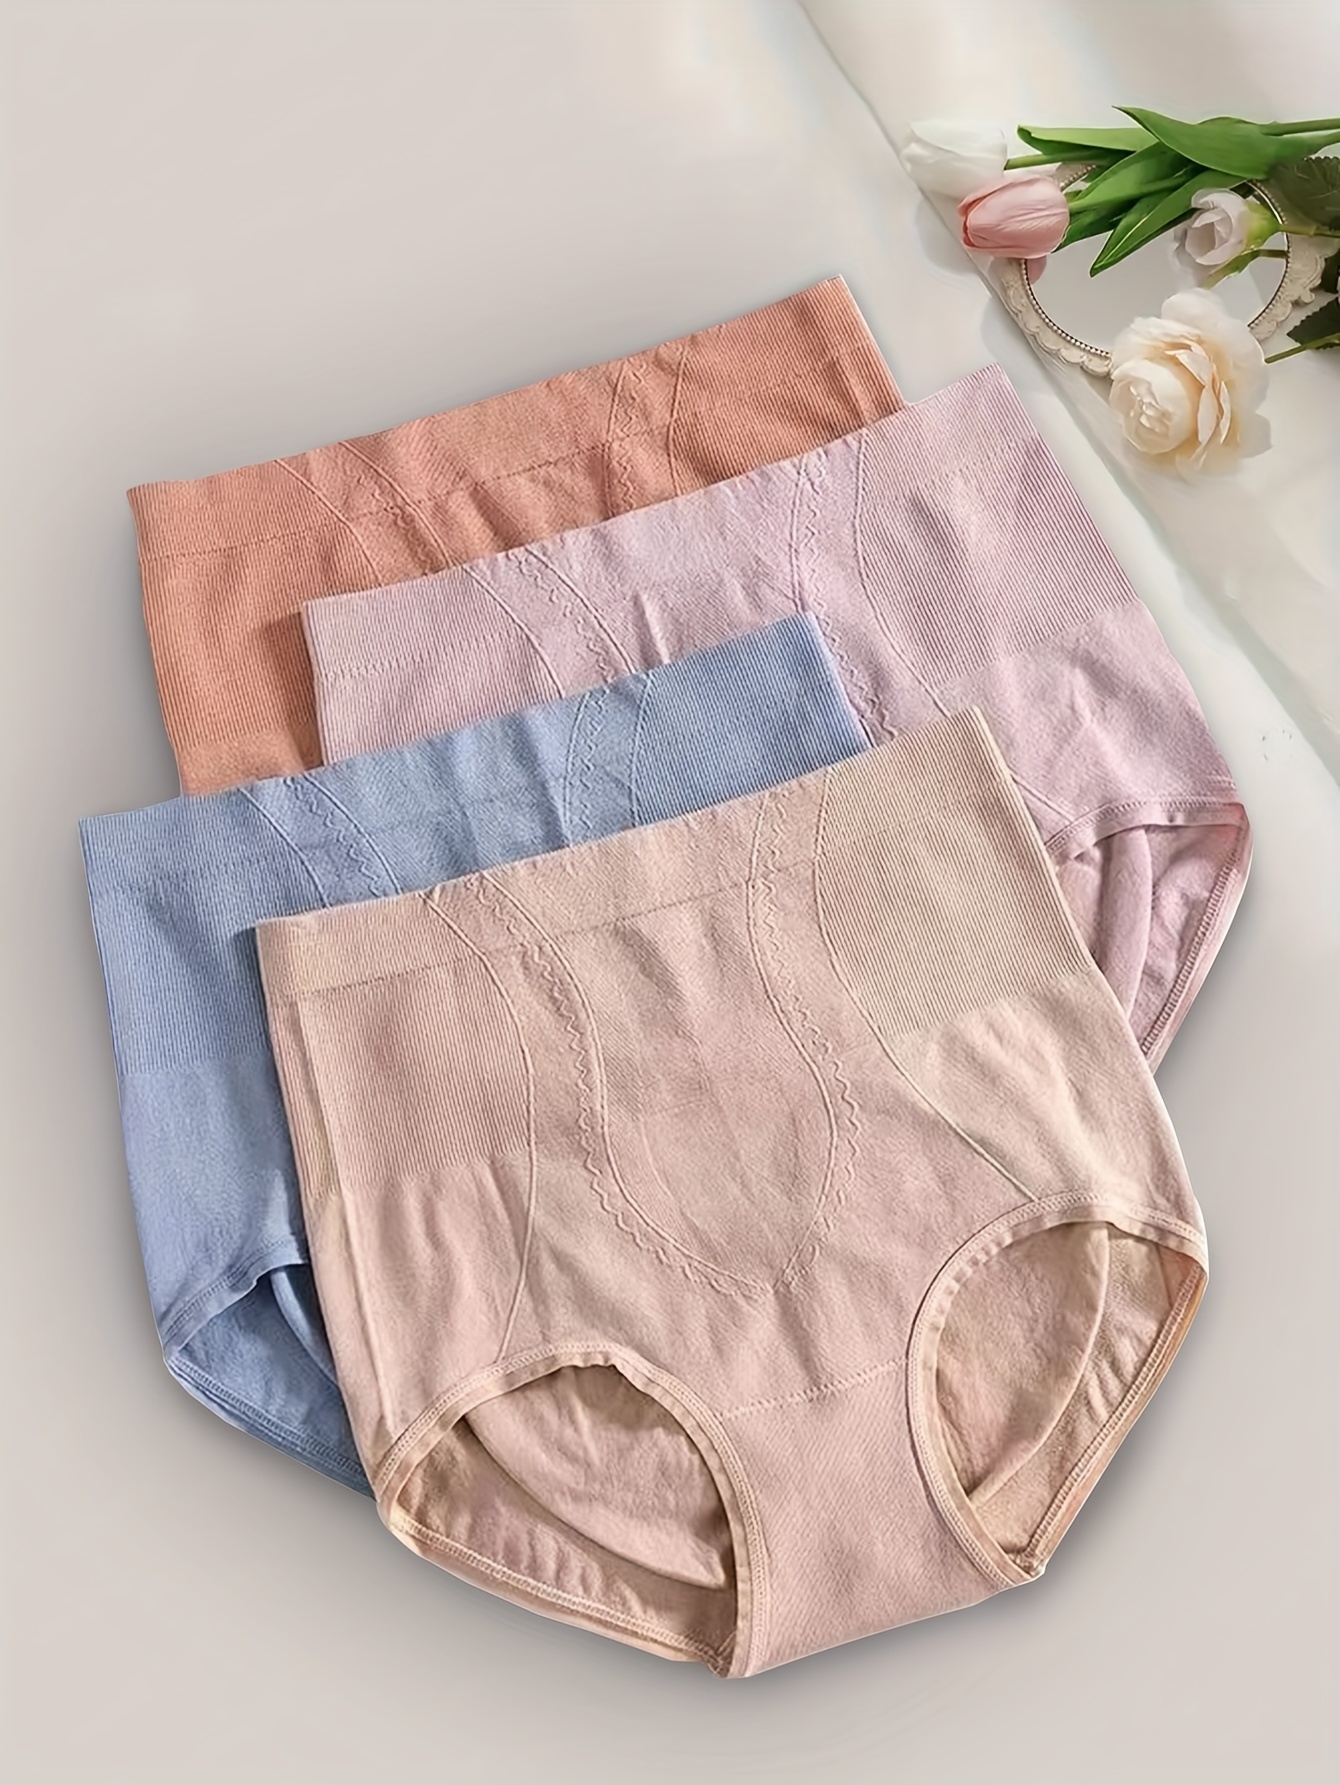 4pcs Women's Cotton Underwear High Waisted Full Coverage Ladies Panties